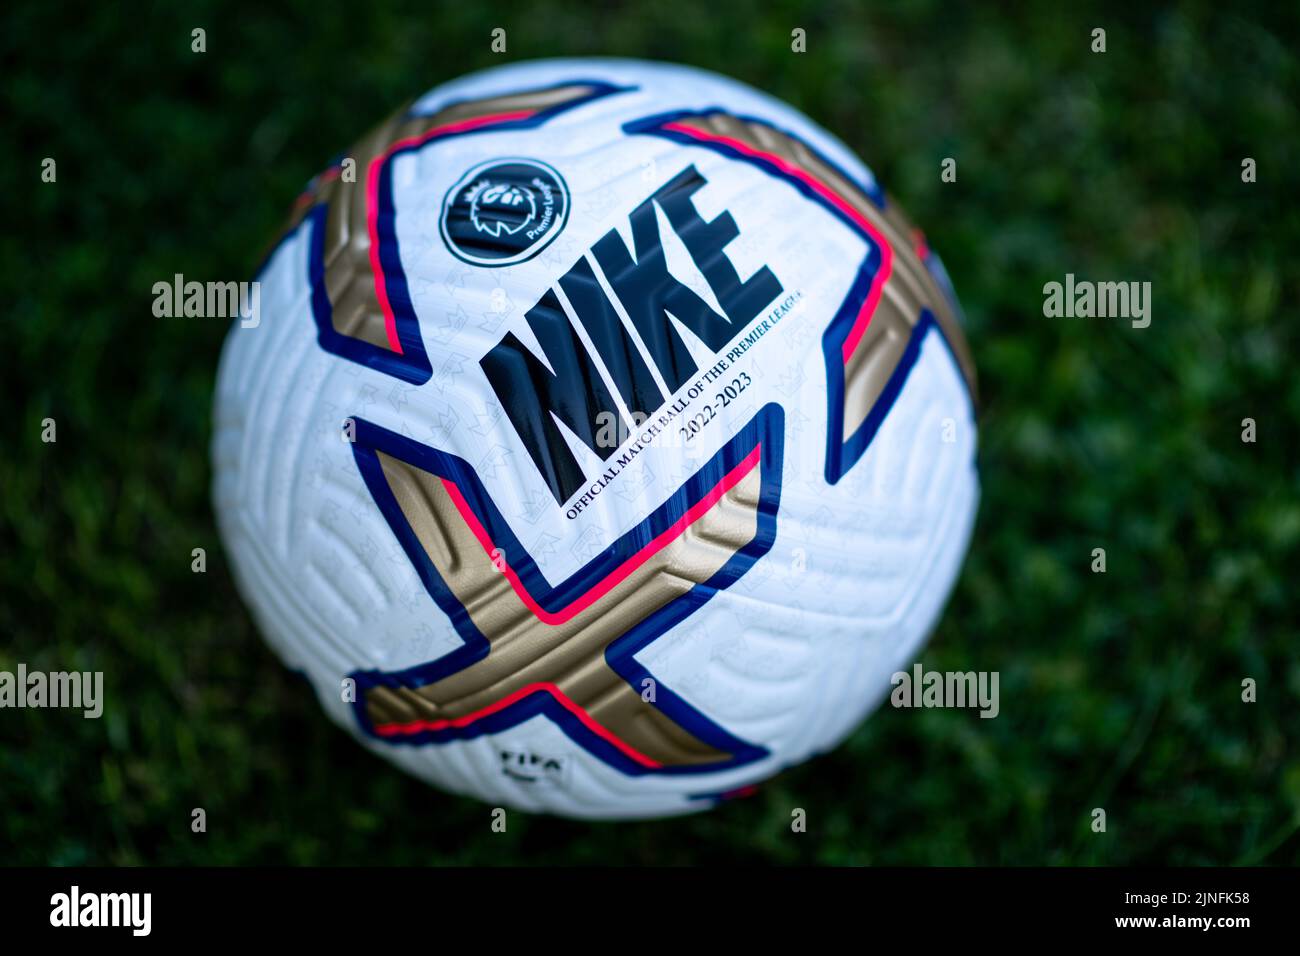 2022/23 balón Nike Flight Premier League Foto de stock